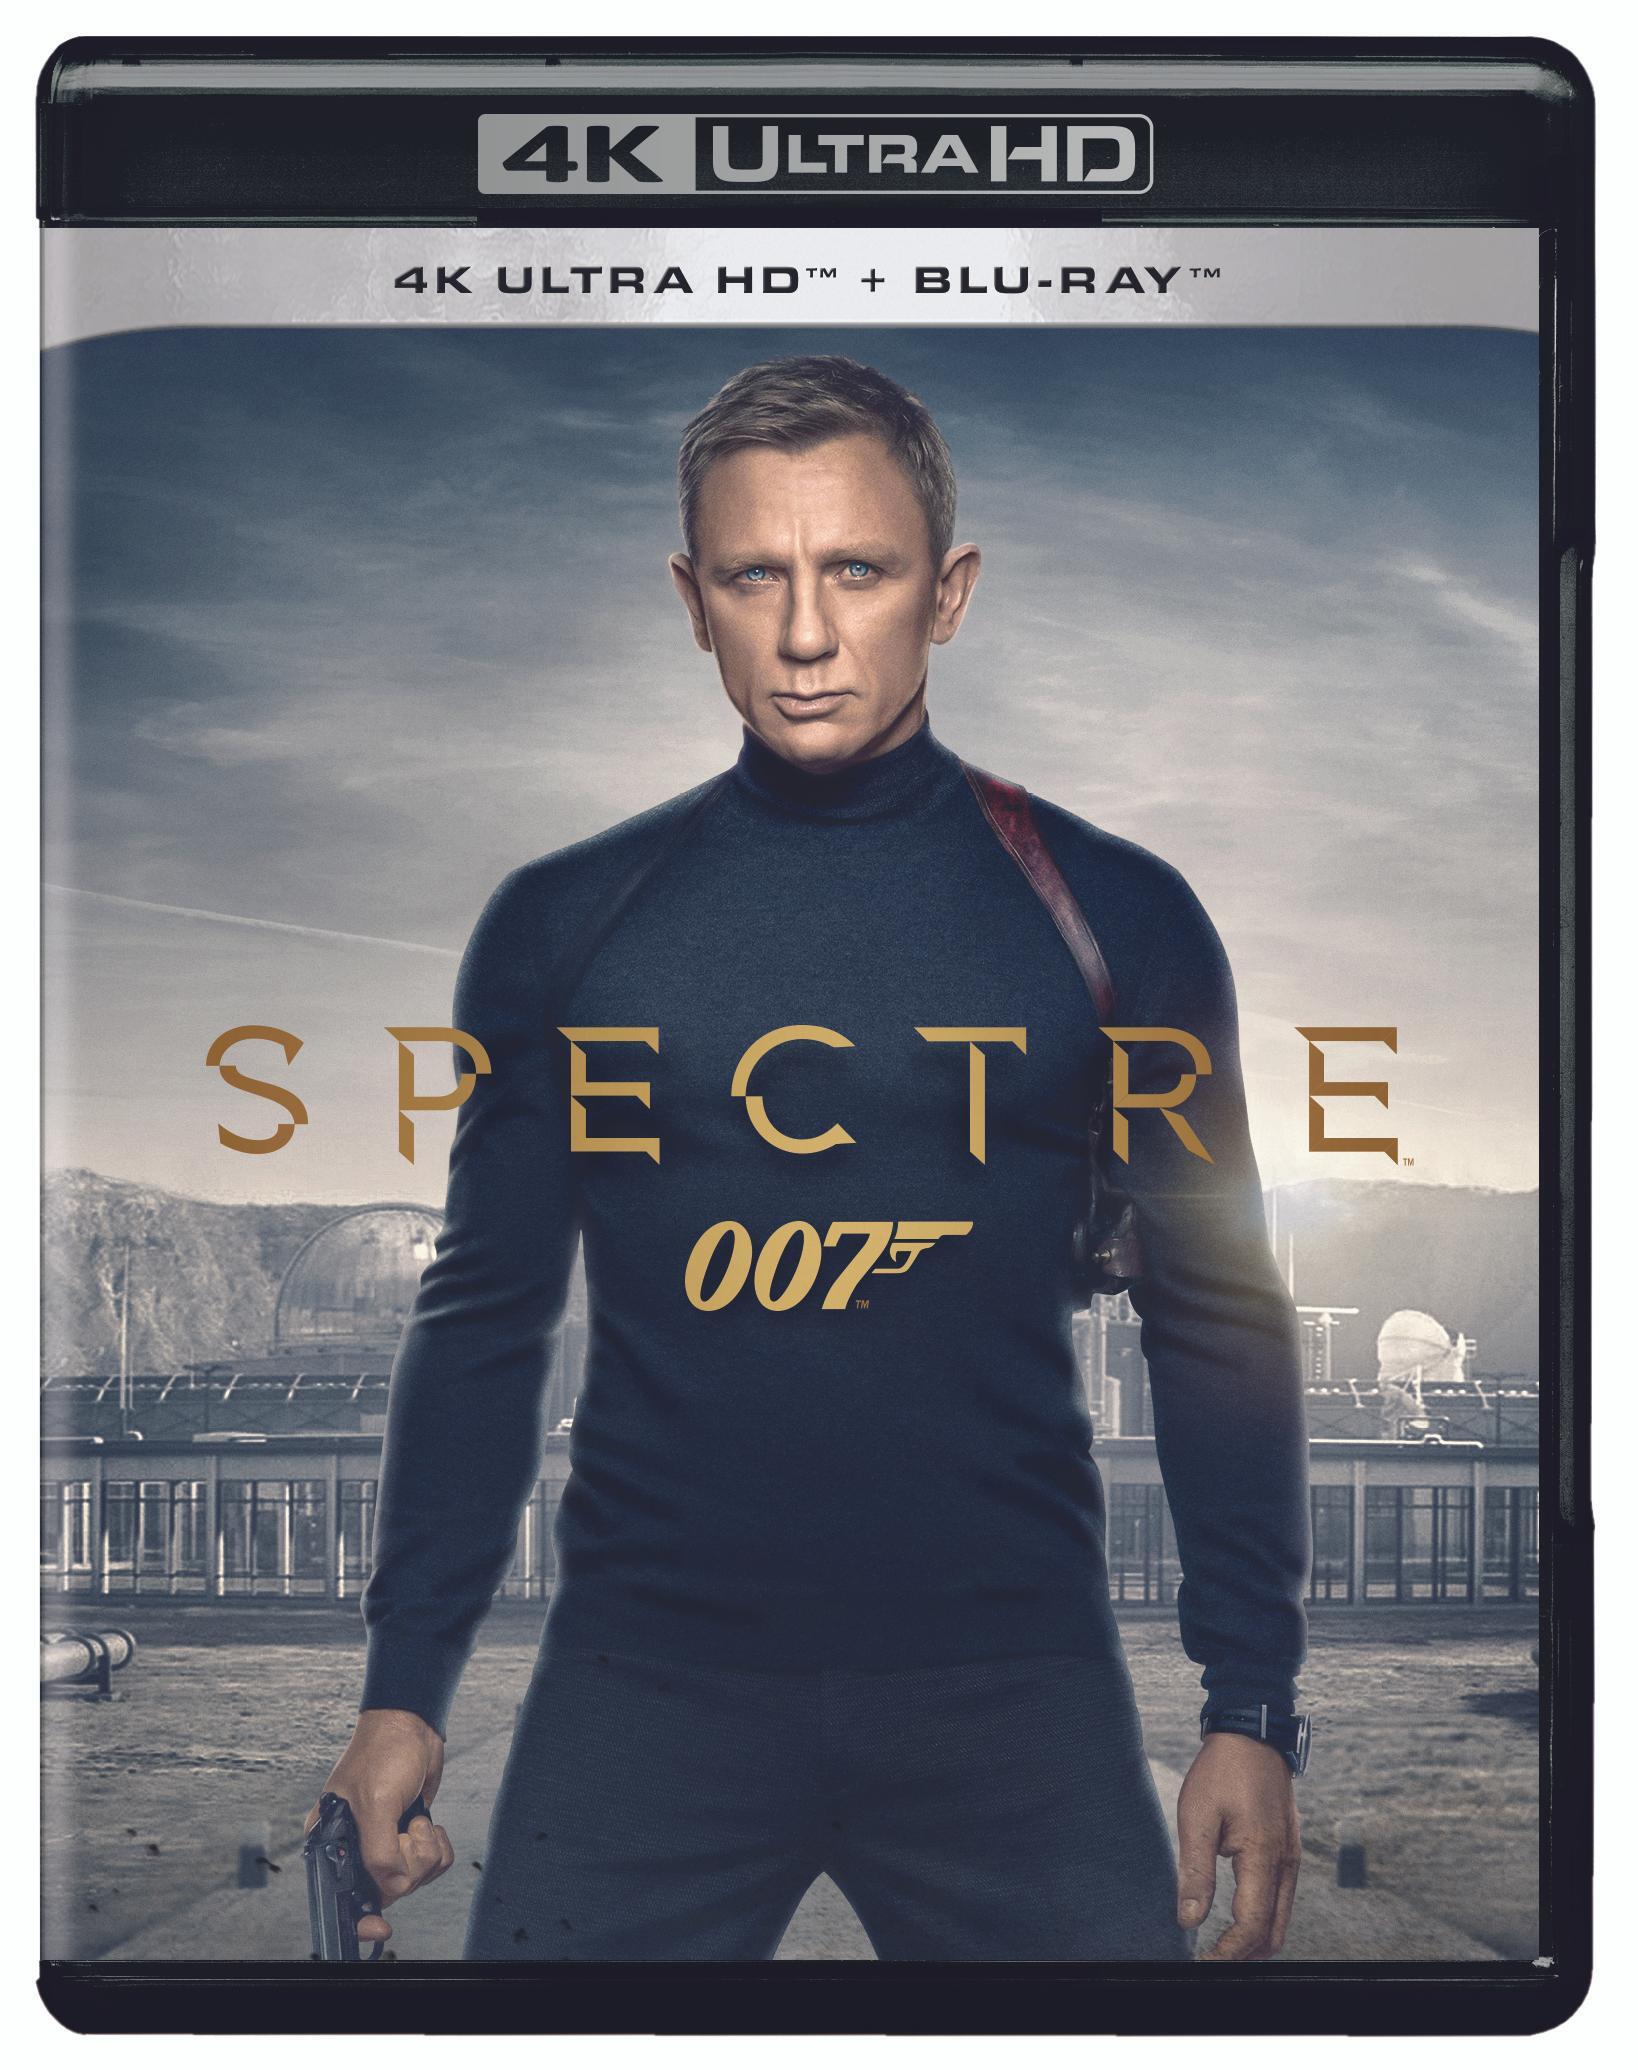 Spectre (4K Ultra HD + Blu-ray) - UHD [ 2015 ]  - Action Movies On 4K Ultra HD Blu-ray - Movies On GRUV